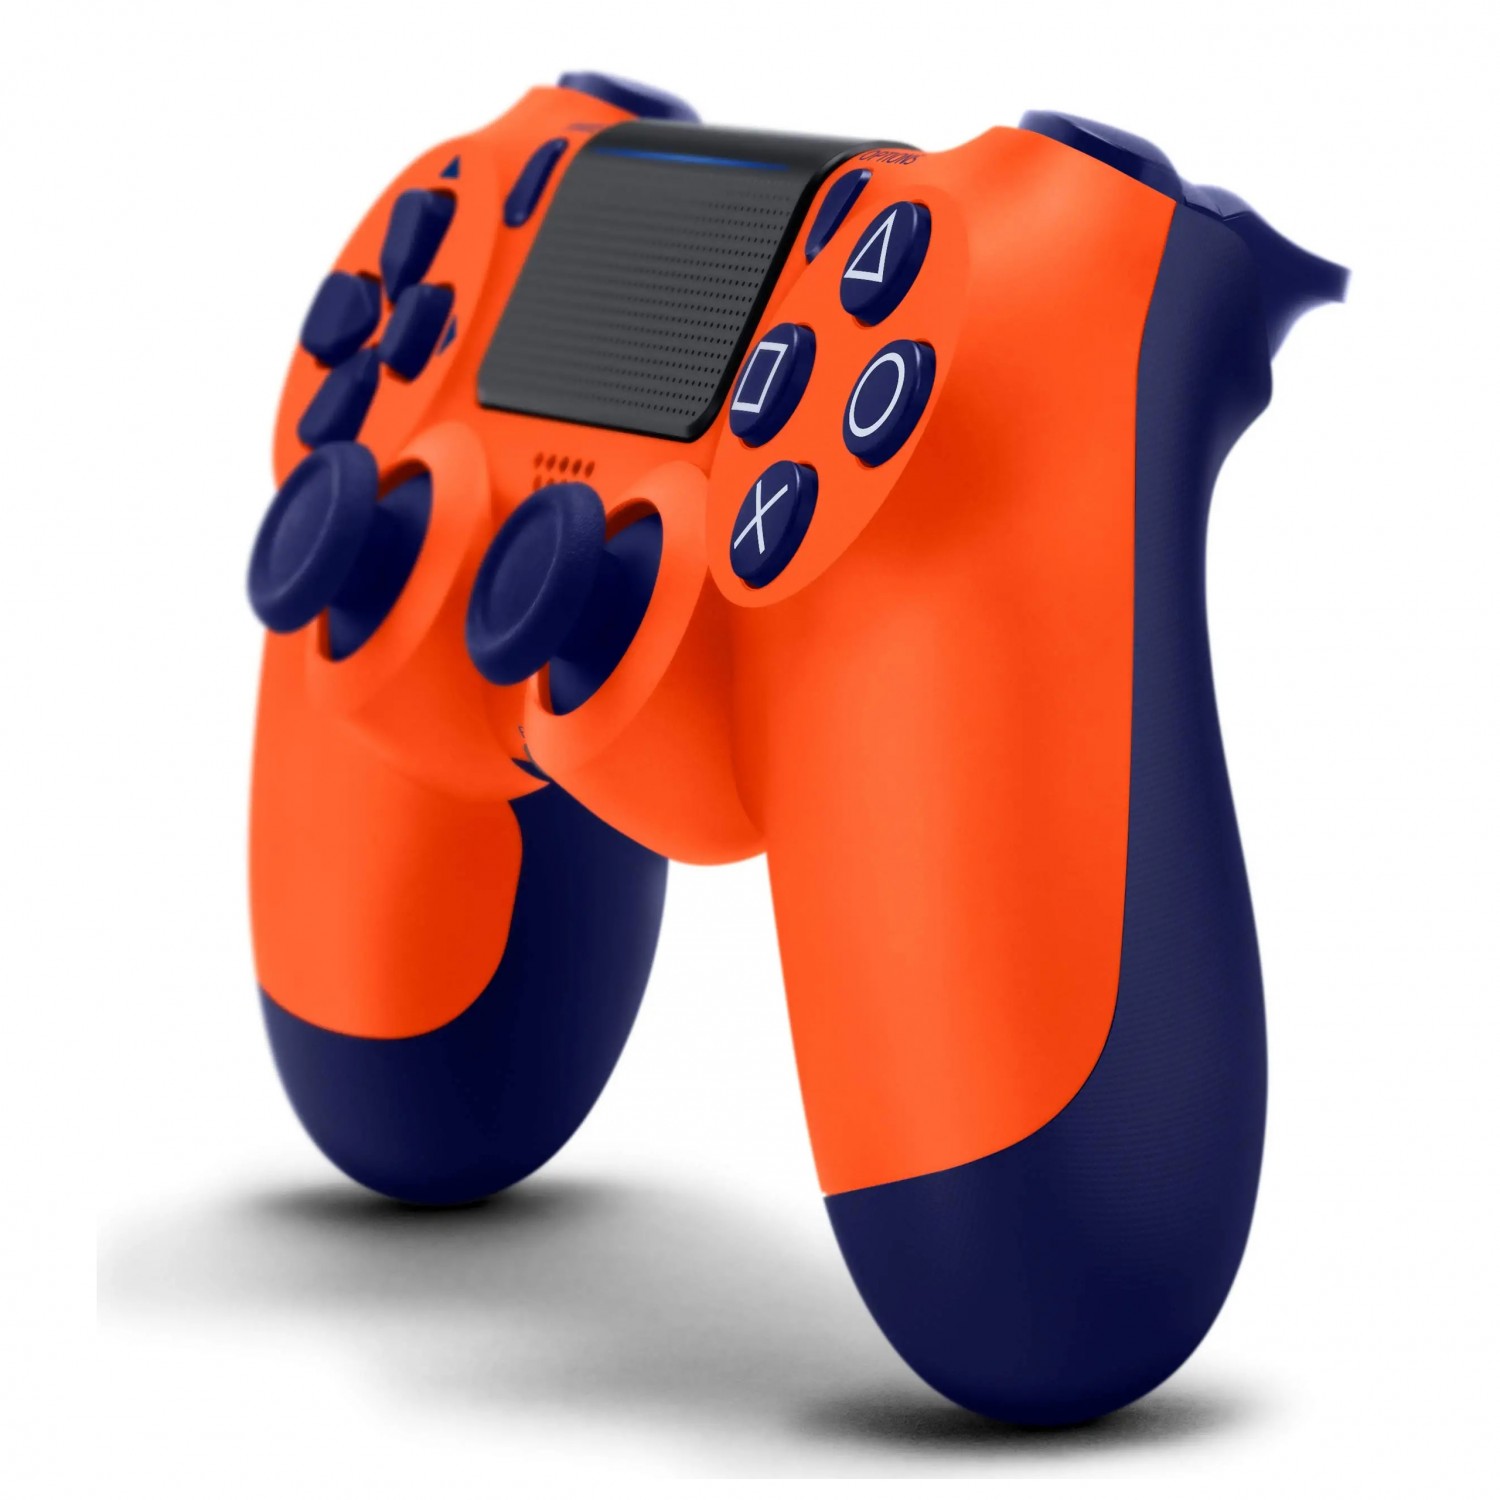 دسته بازی Sony PS4 DualShock 4 - Sunset Orange-1